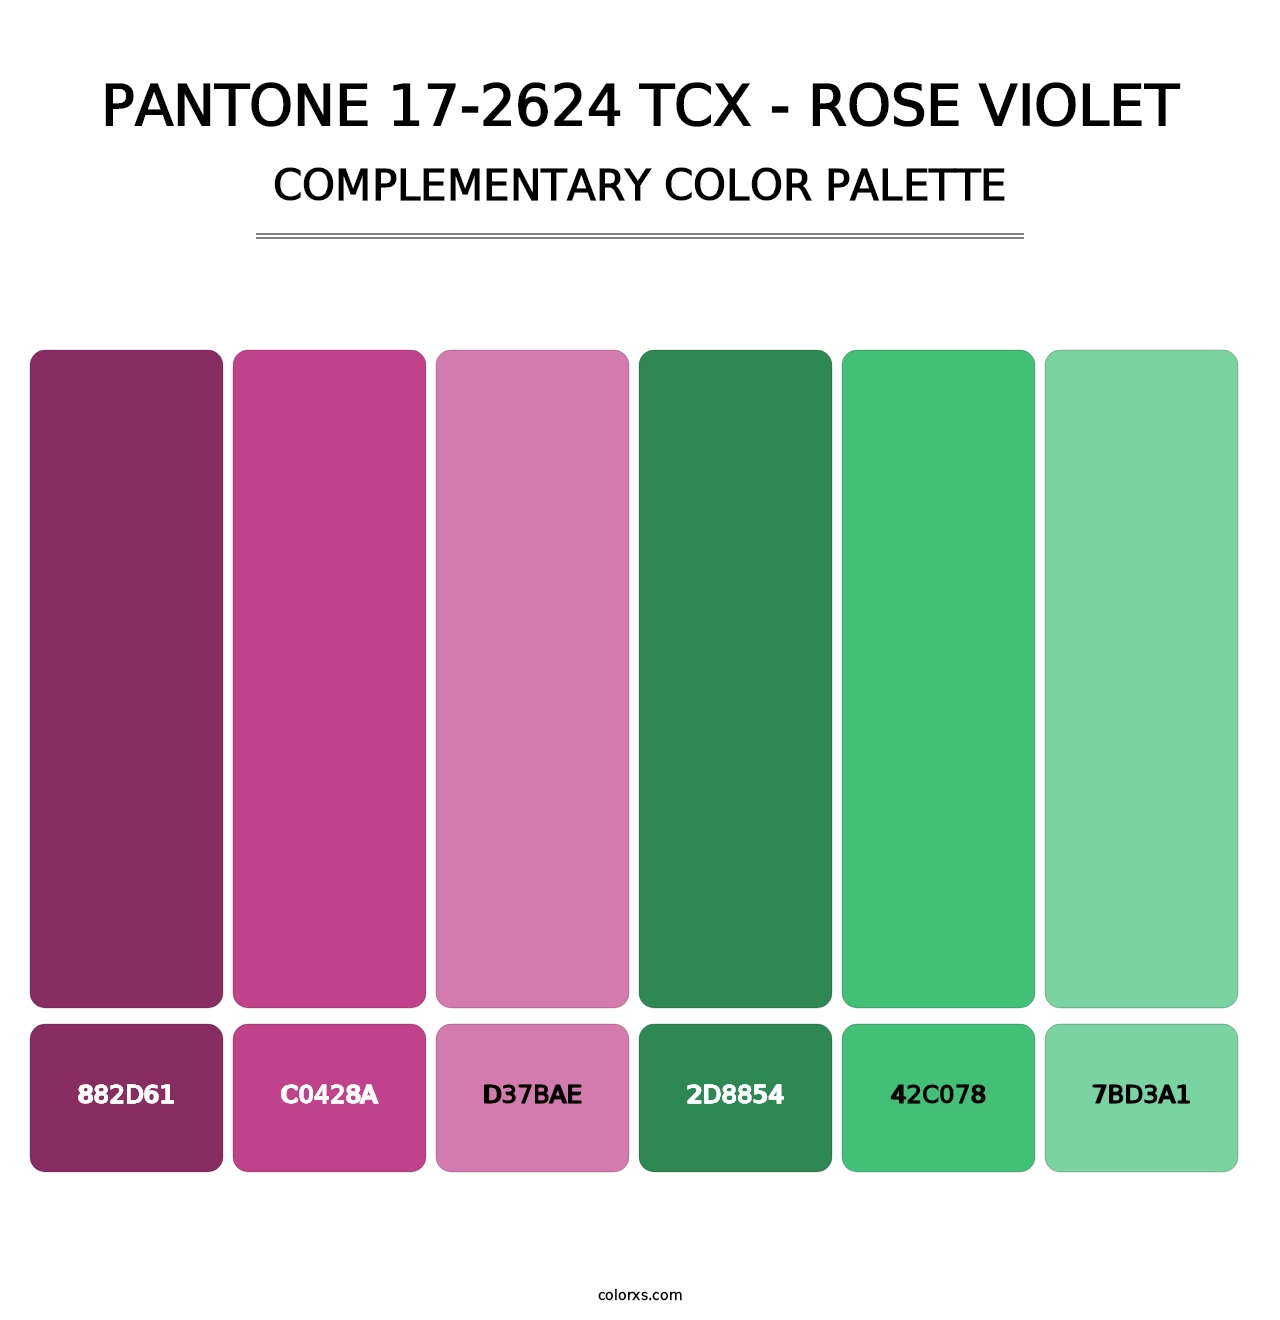 PANTONE 17-2624 TCX - Rose Violet - Complementary Color Palette